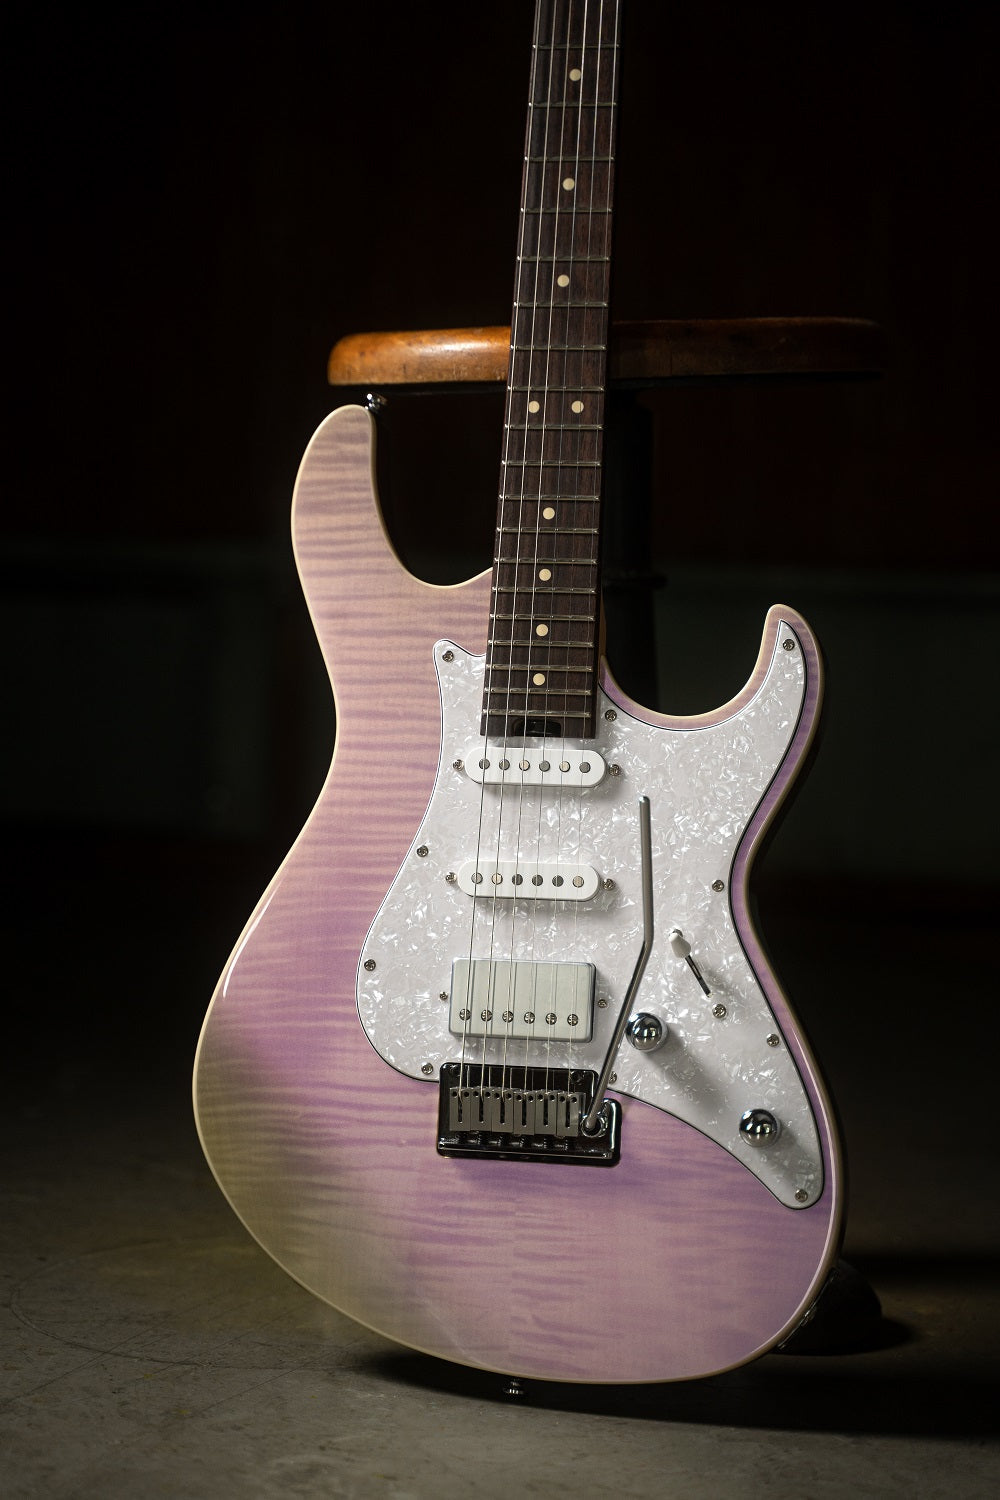 Cort G280 Select Trans Chameleon Purple, Electric Guitar for sale at Richards Guitars.